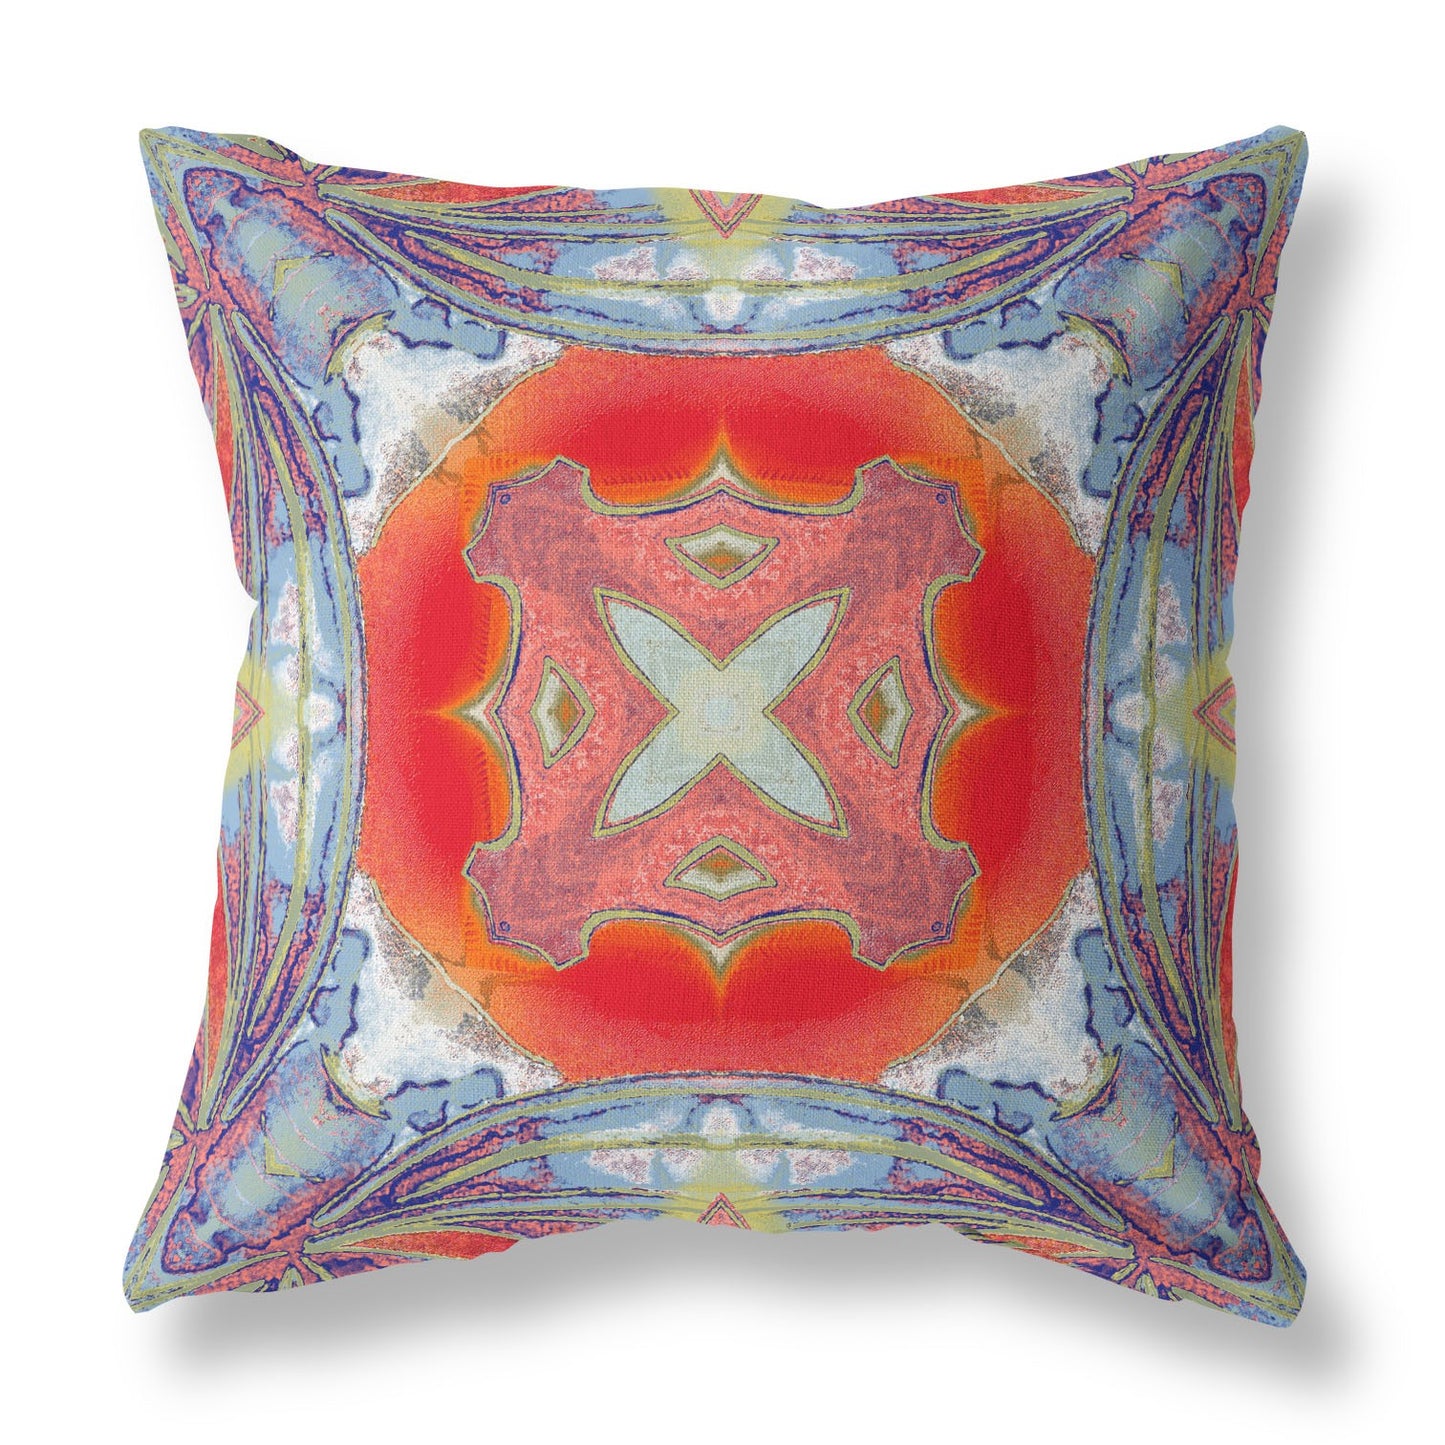 5" X 20" Blue and Orange Geometric Indoor Outdoor Throw Pillow